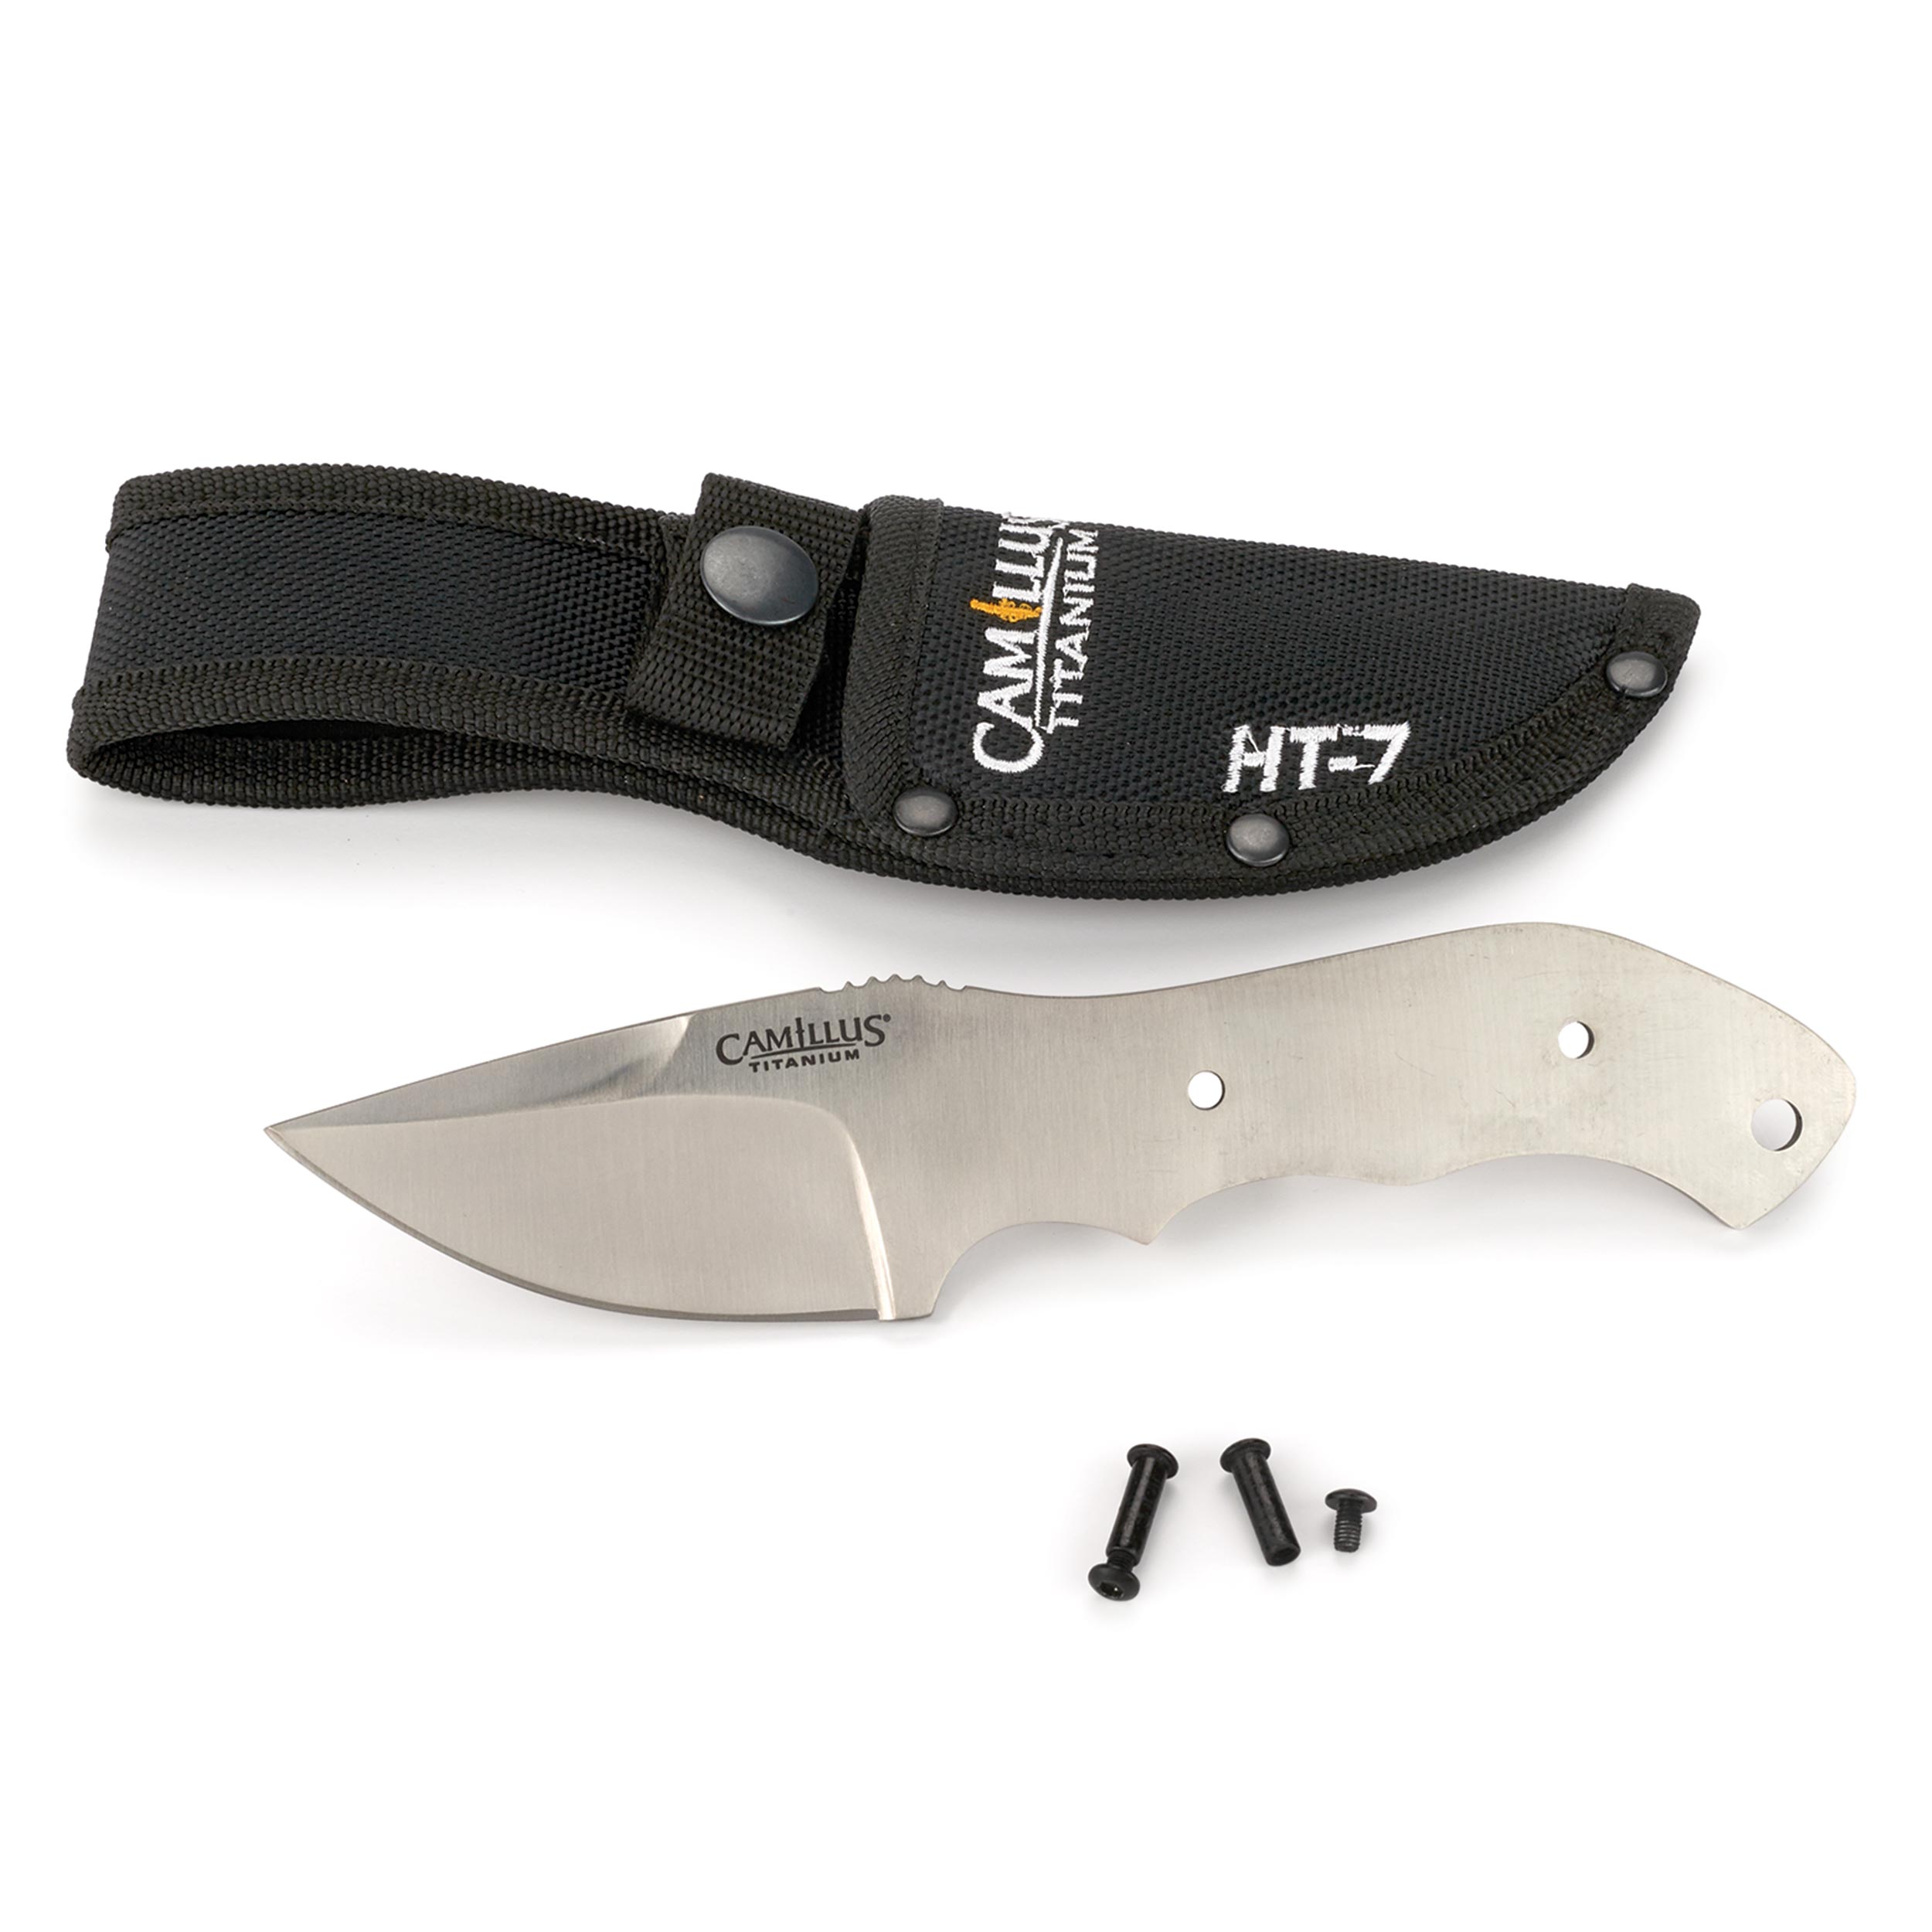 Ht-7 Fixed Blade Knife Kit